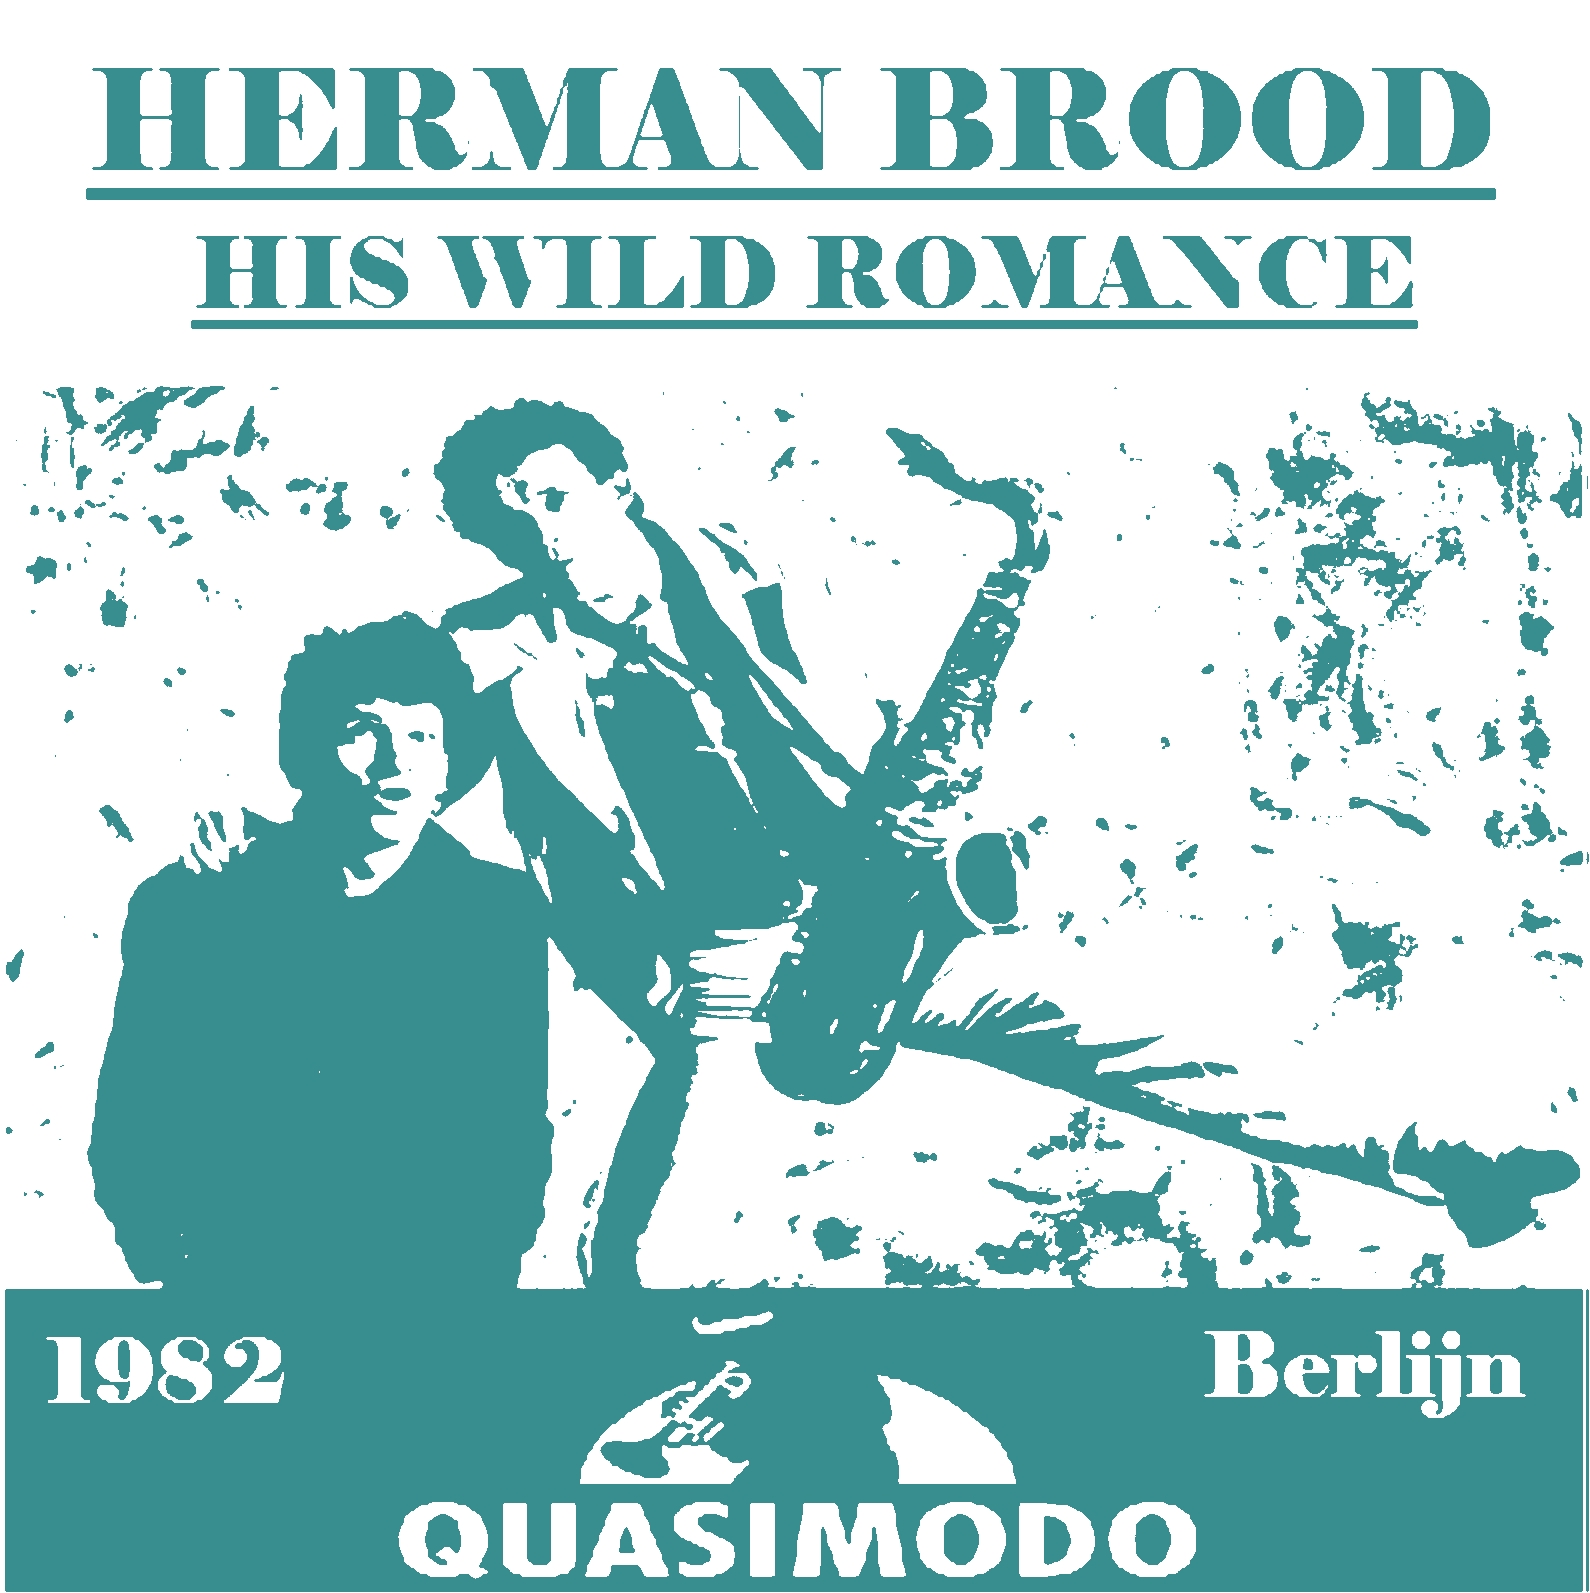 HermanBroodAndHisWildRomance1982-03-30QuasimodoBerlinGermany.jpg